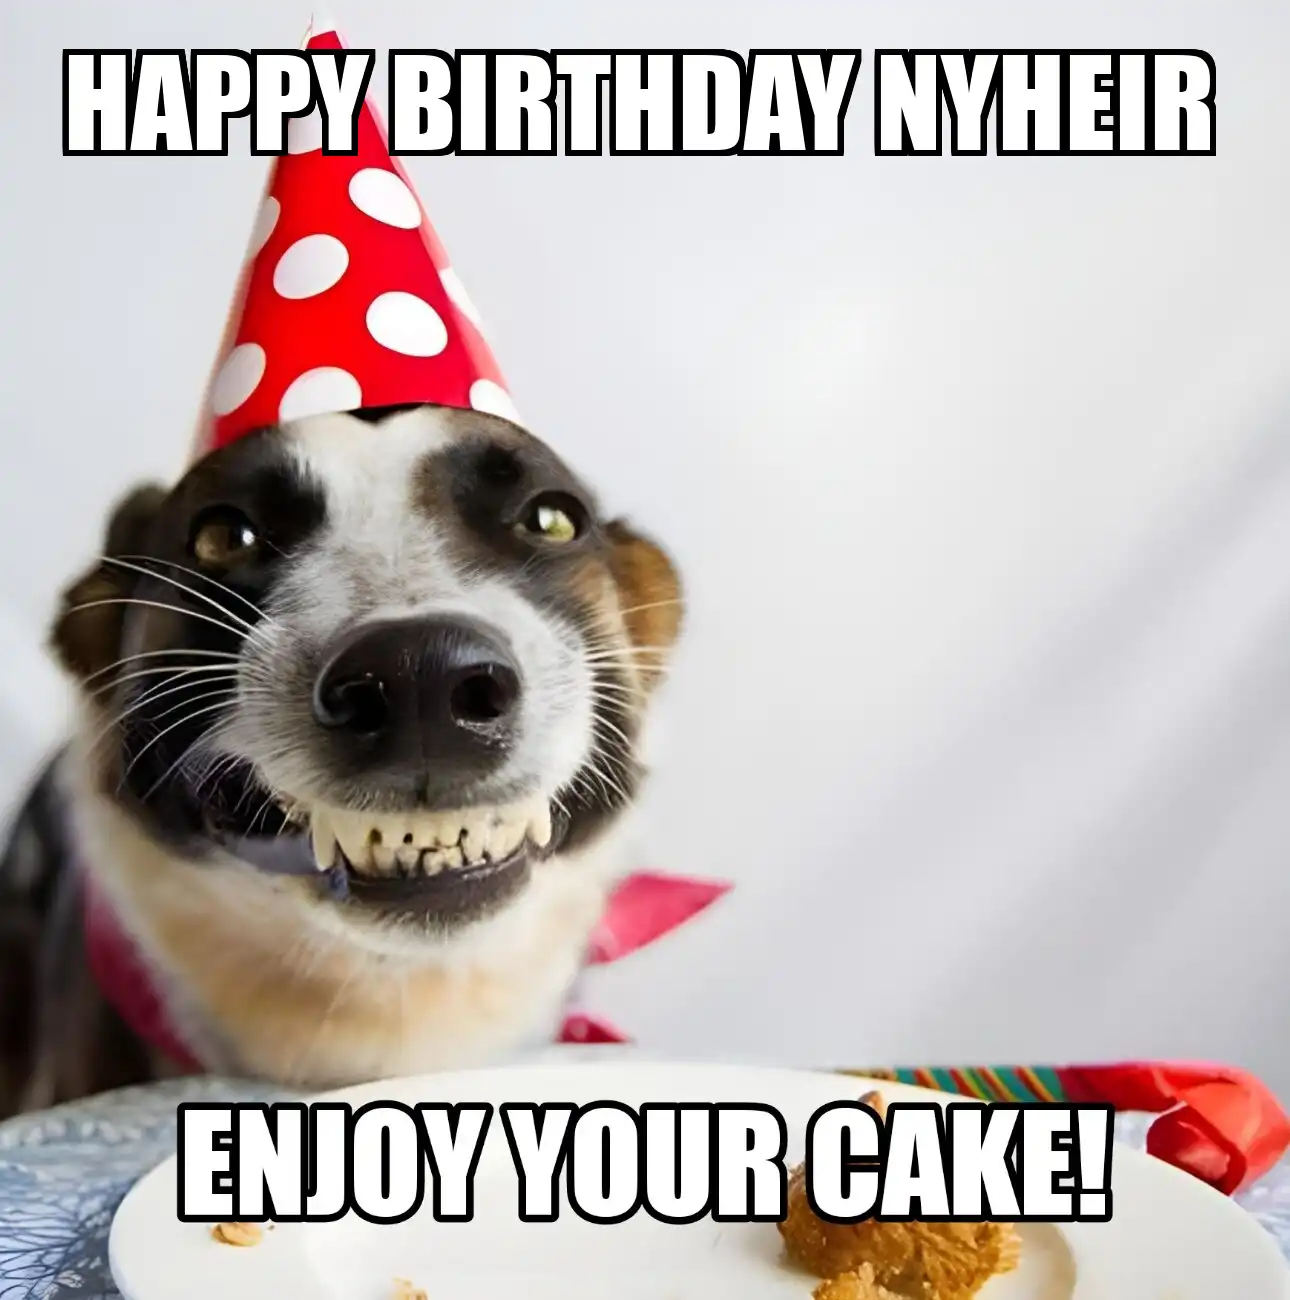 Happy Birthday Nyheir Enjoy Your Cake Dog Meme